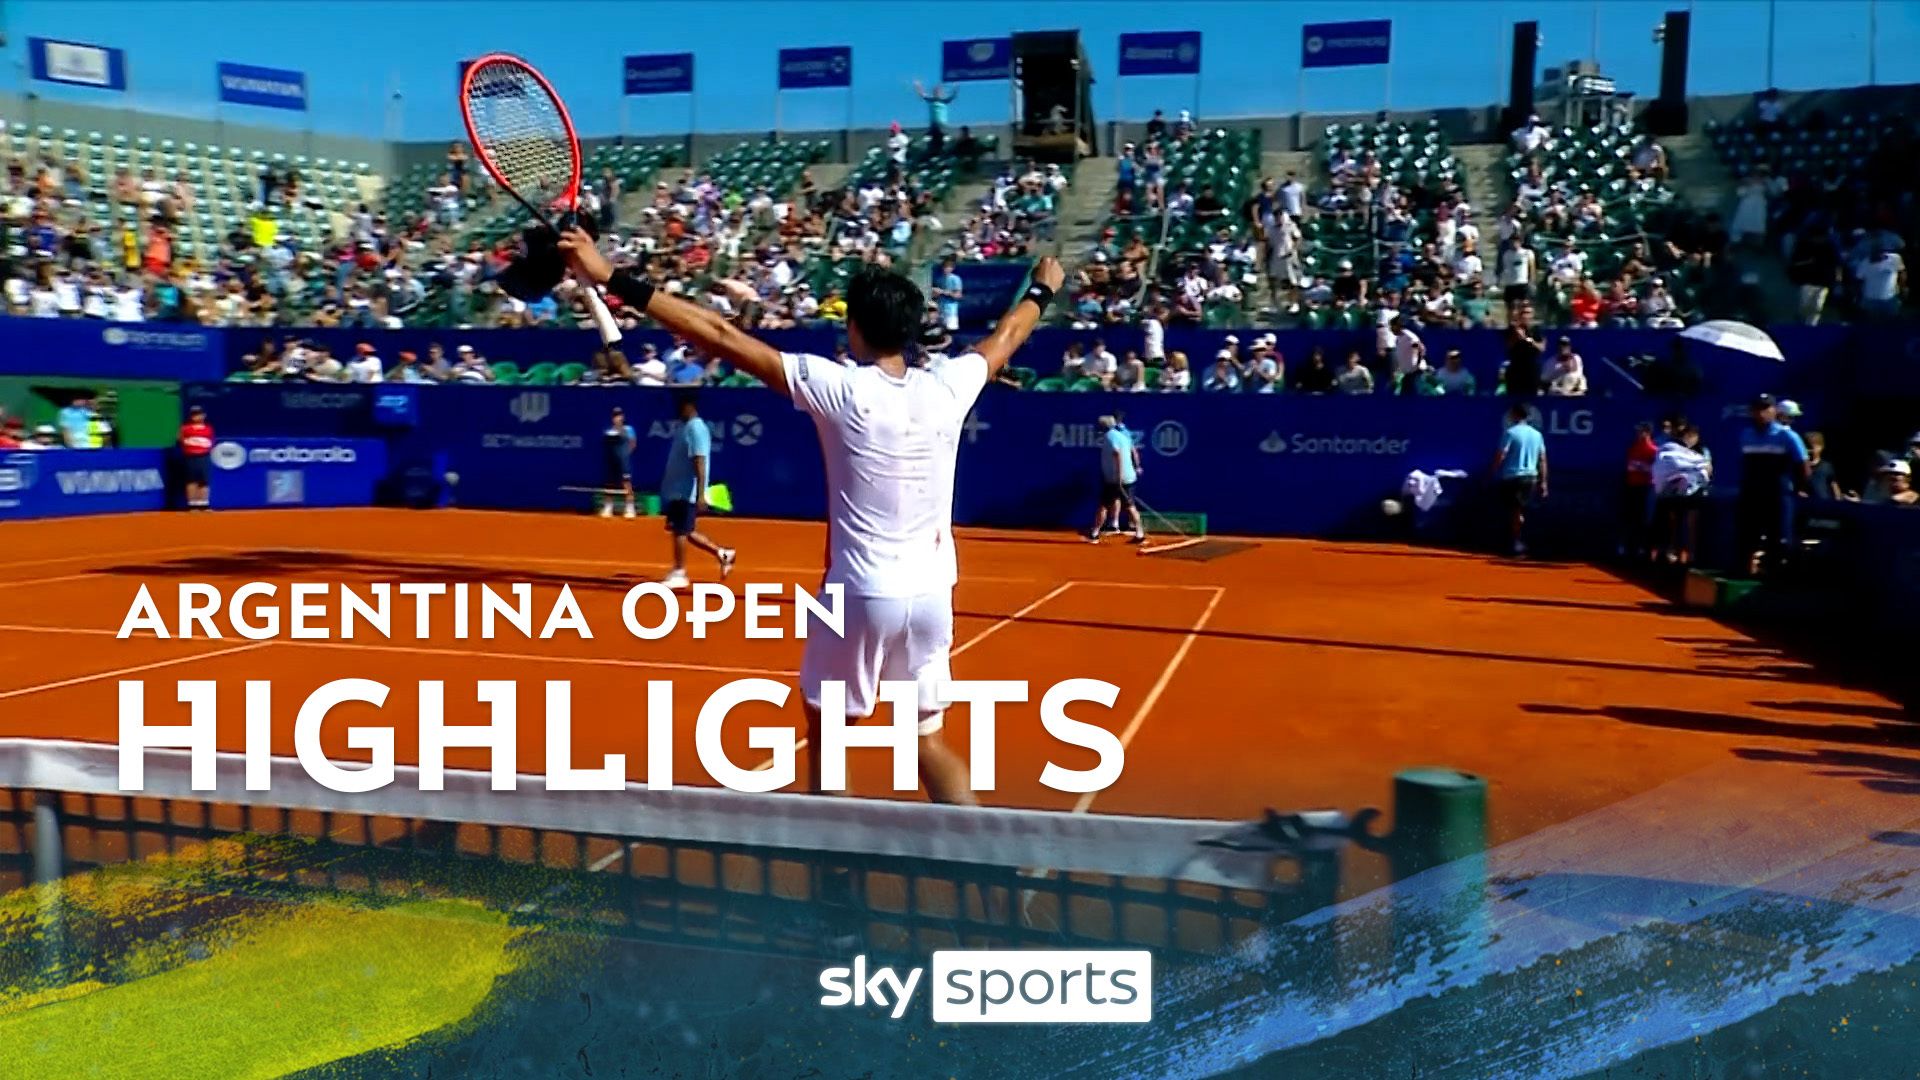 Coria stuns Ofner to reach second round in Argentina Open